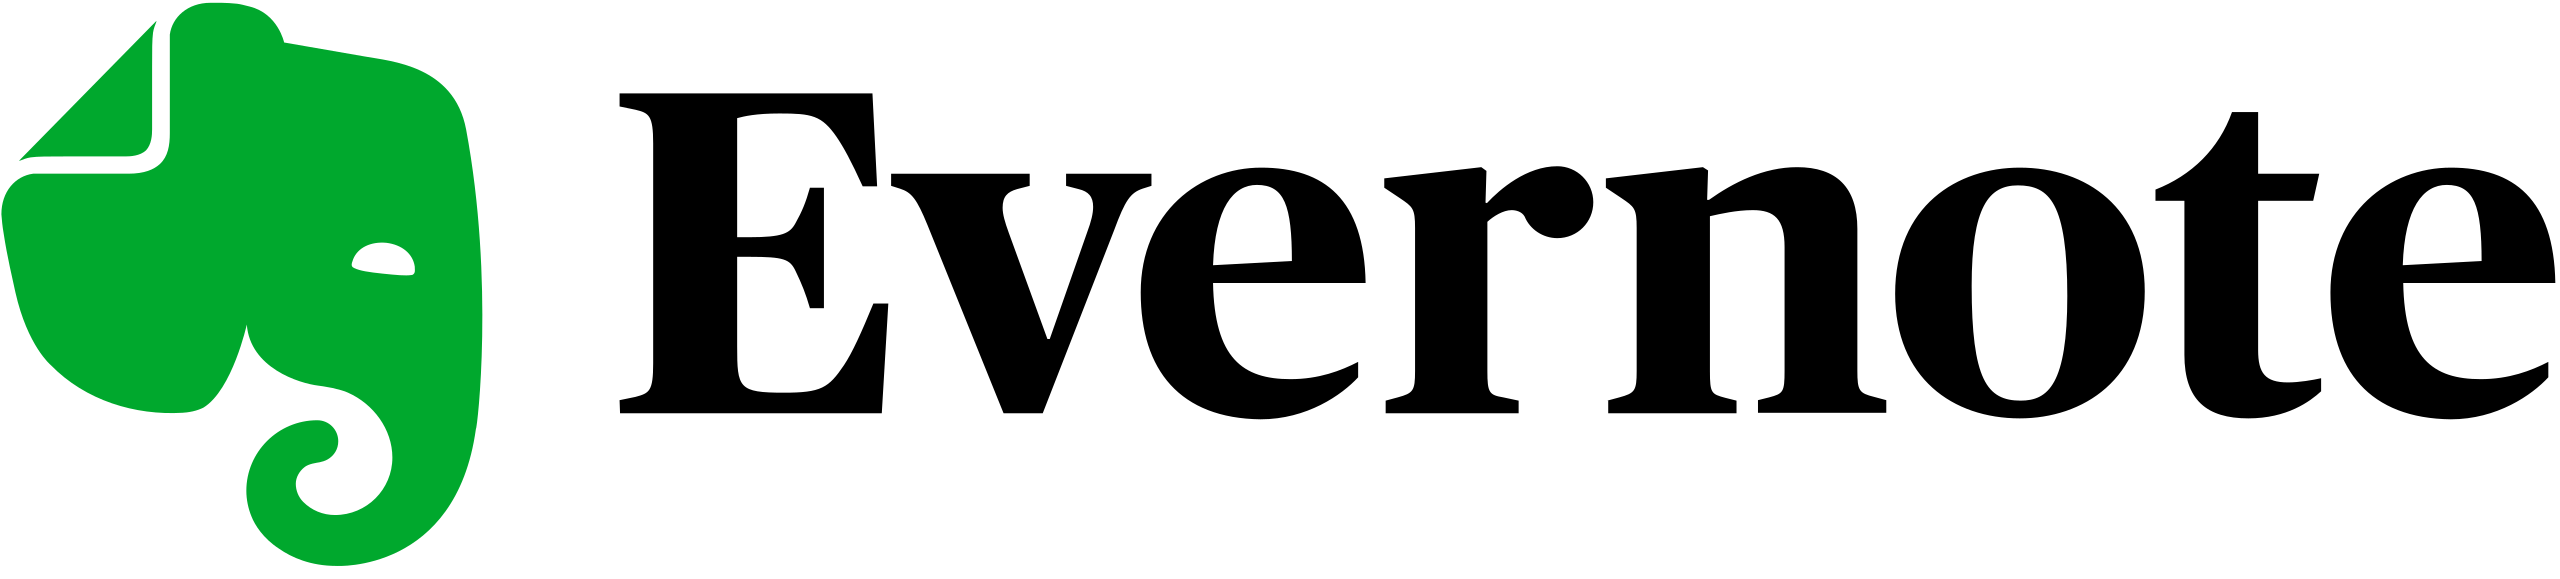 Fichier:Evernote nouveau logo.svg — Wikipédia